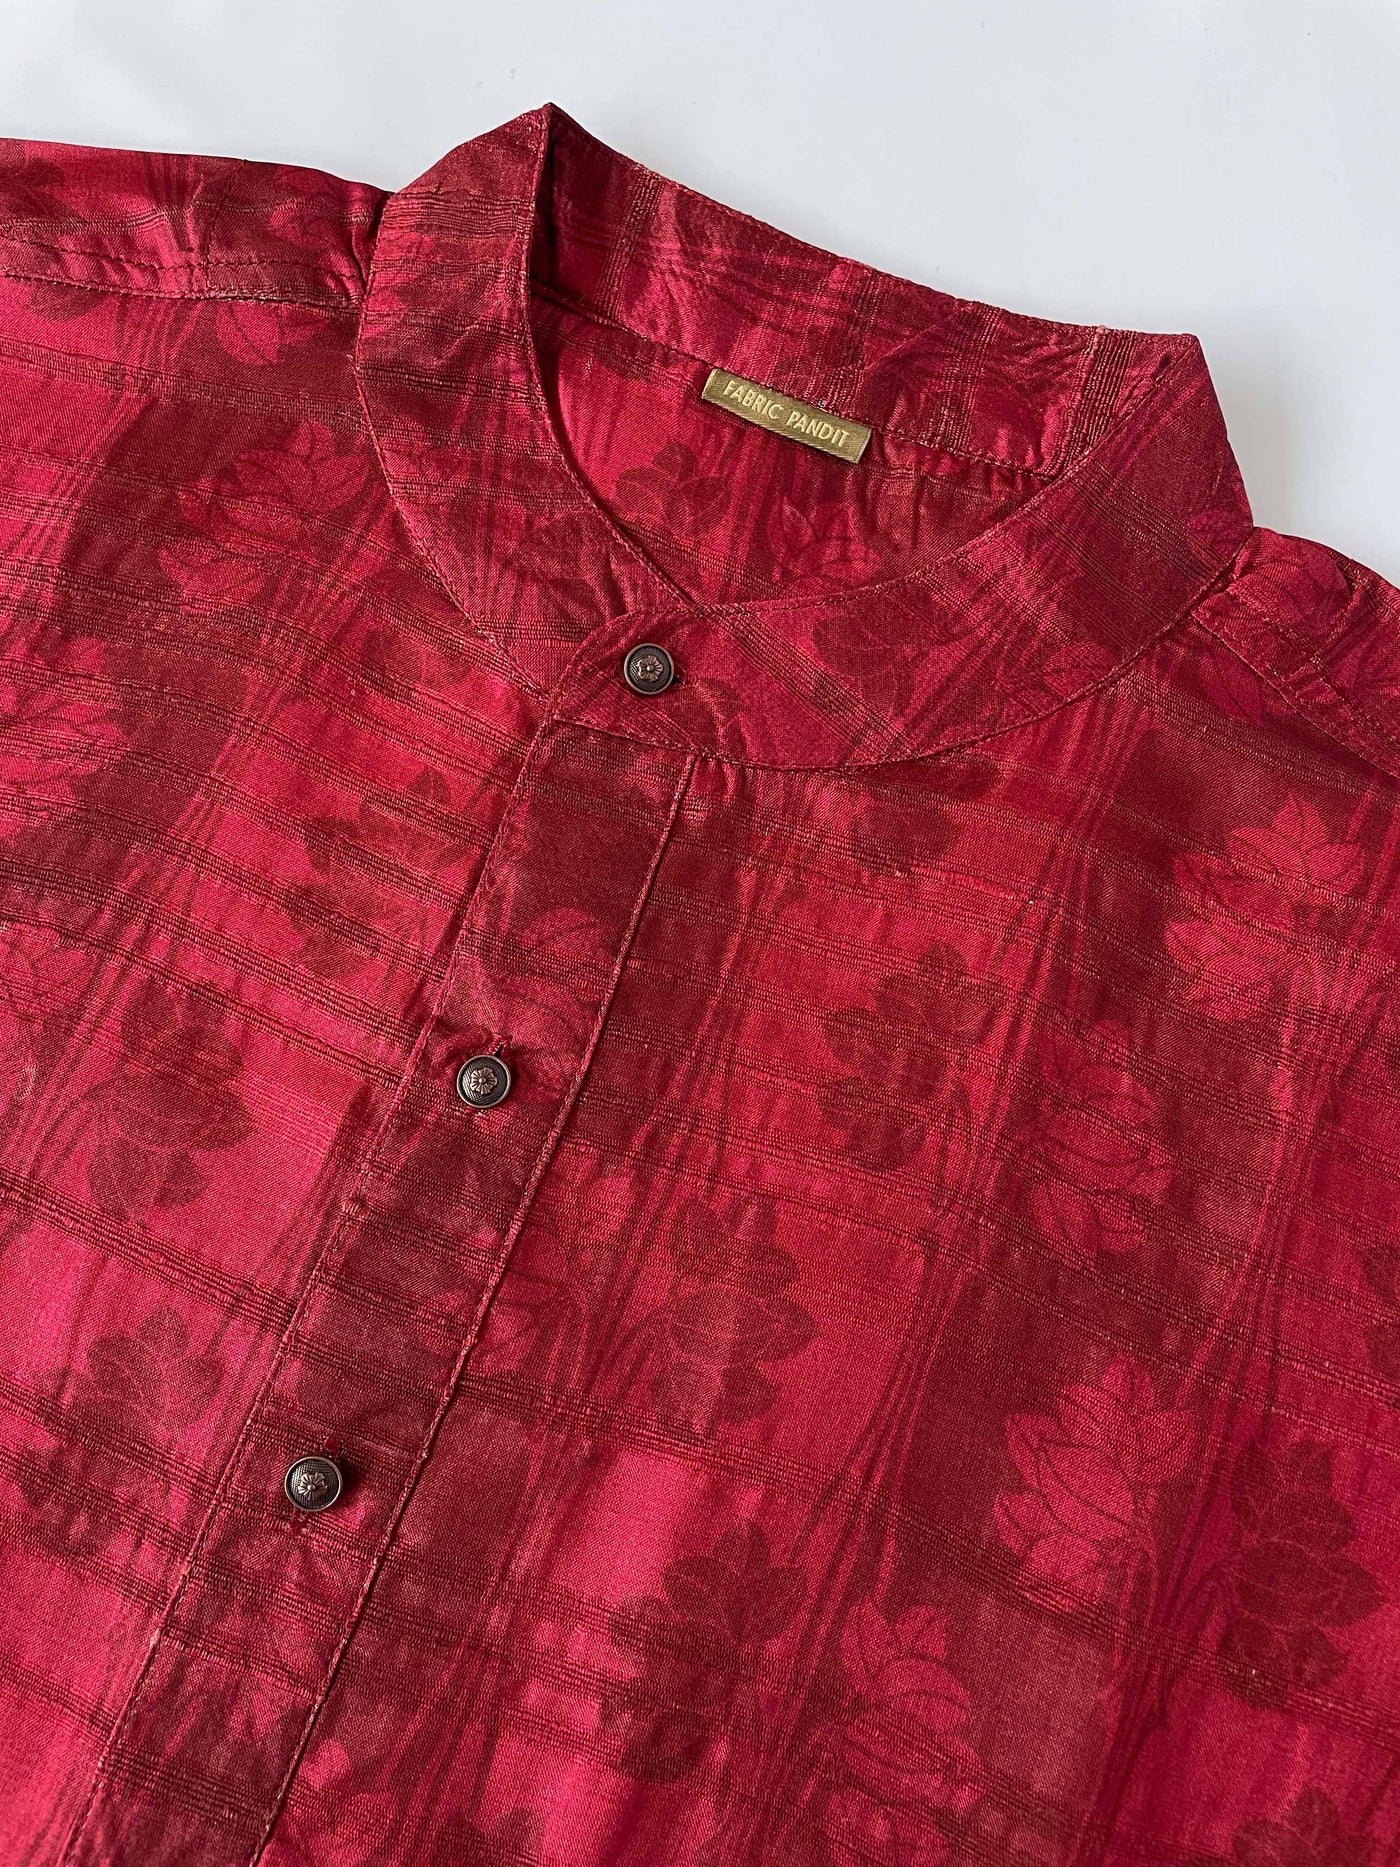 Utsav By Fabric Pandit Men's Stitched Long Kurta Men's Indian Red Blooming Lotus Printed Comfort Fit Long Kurta